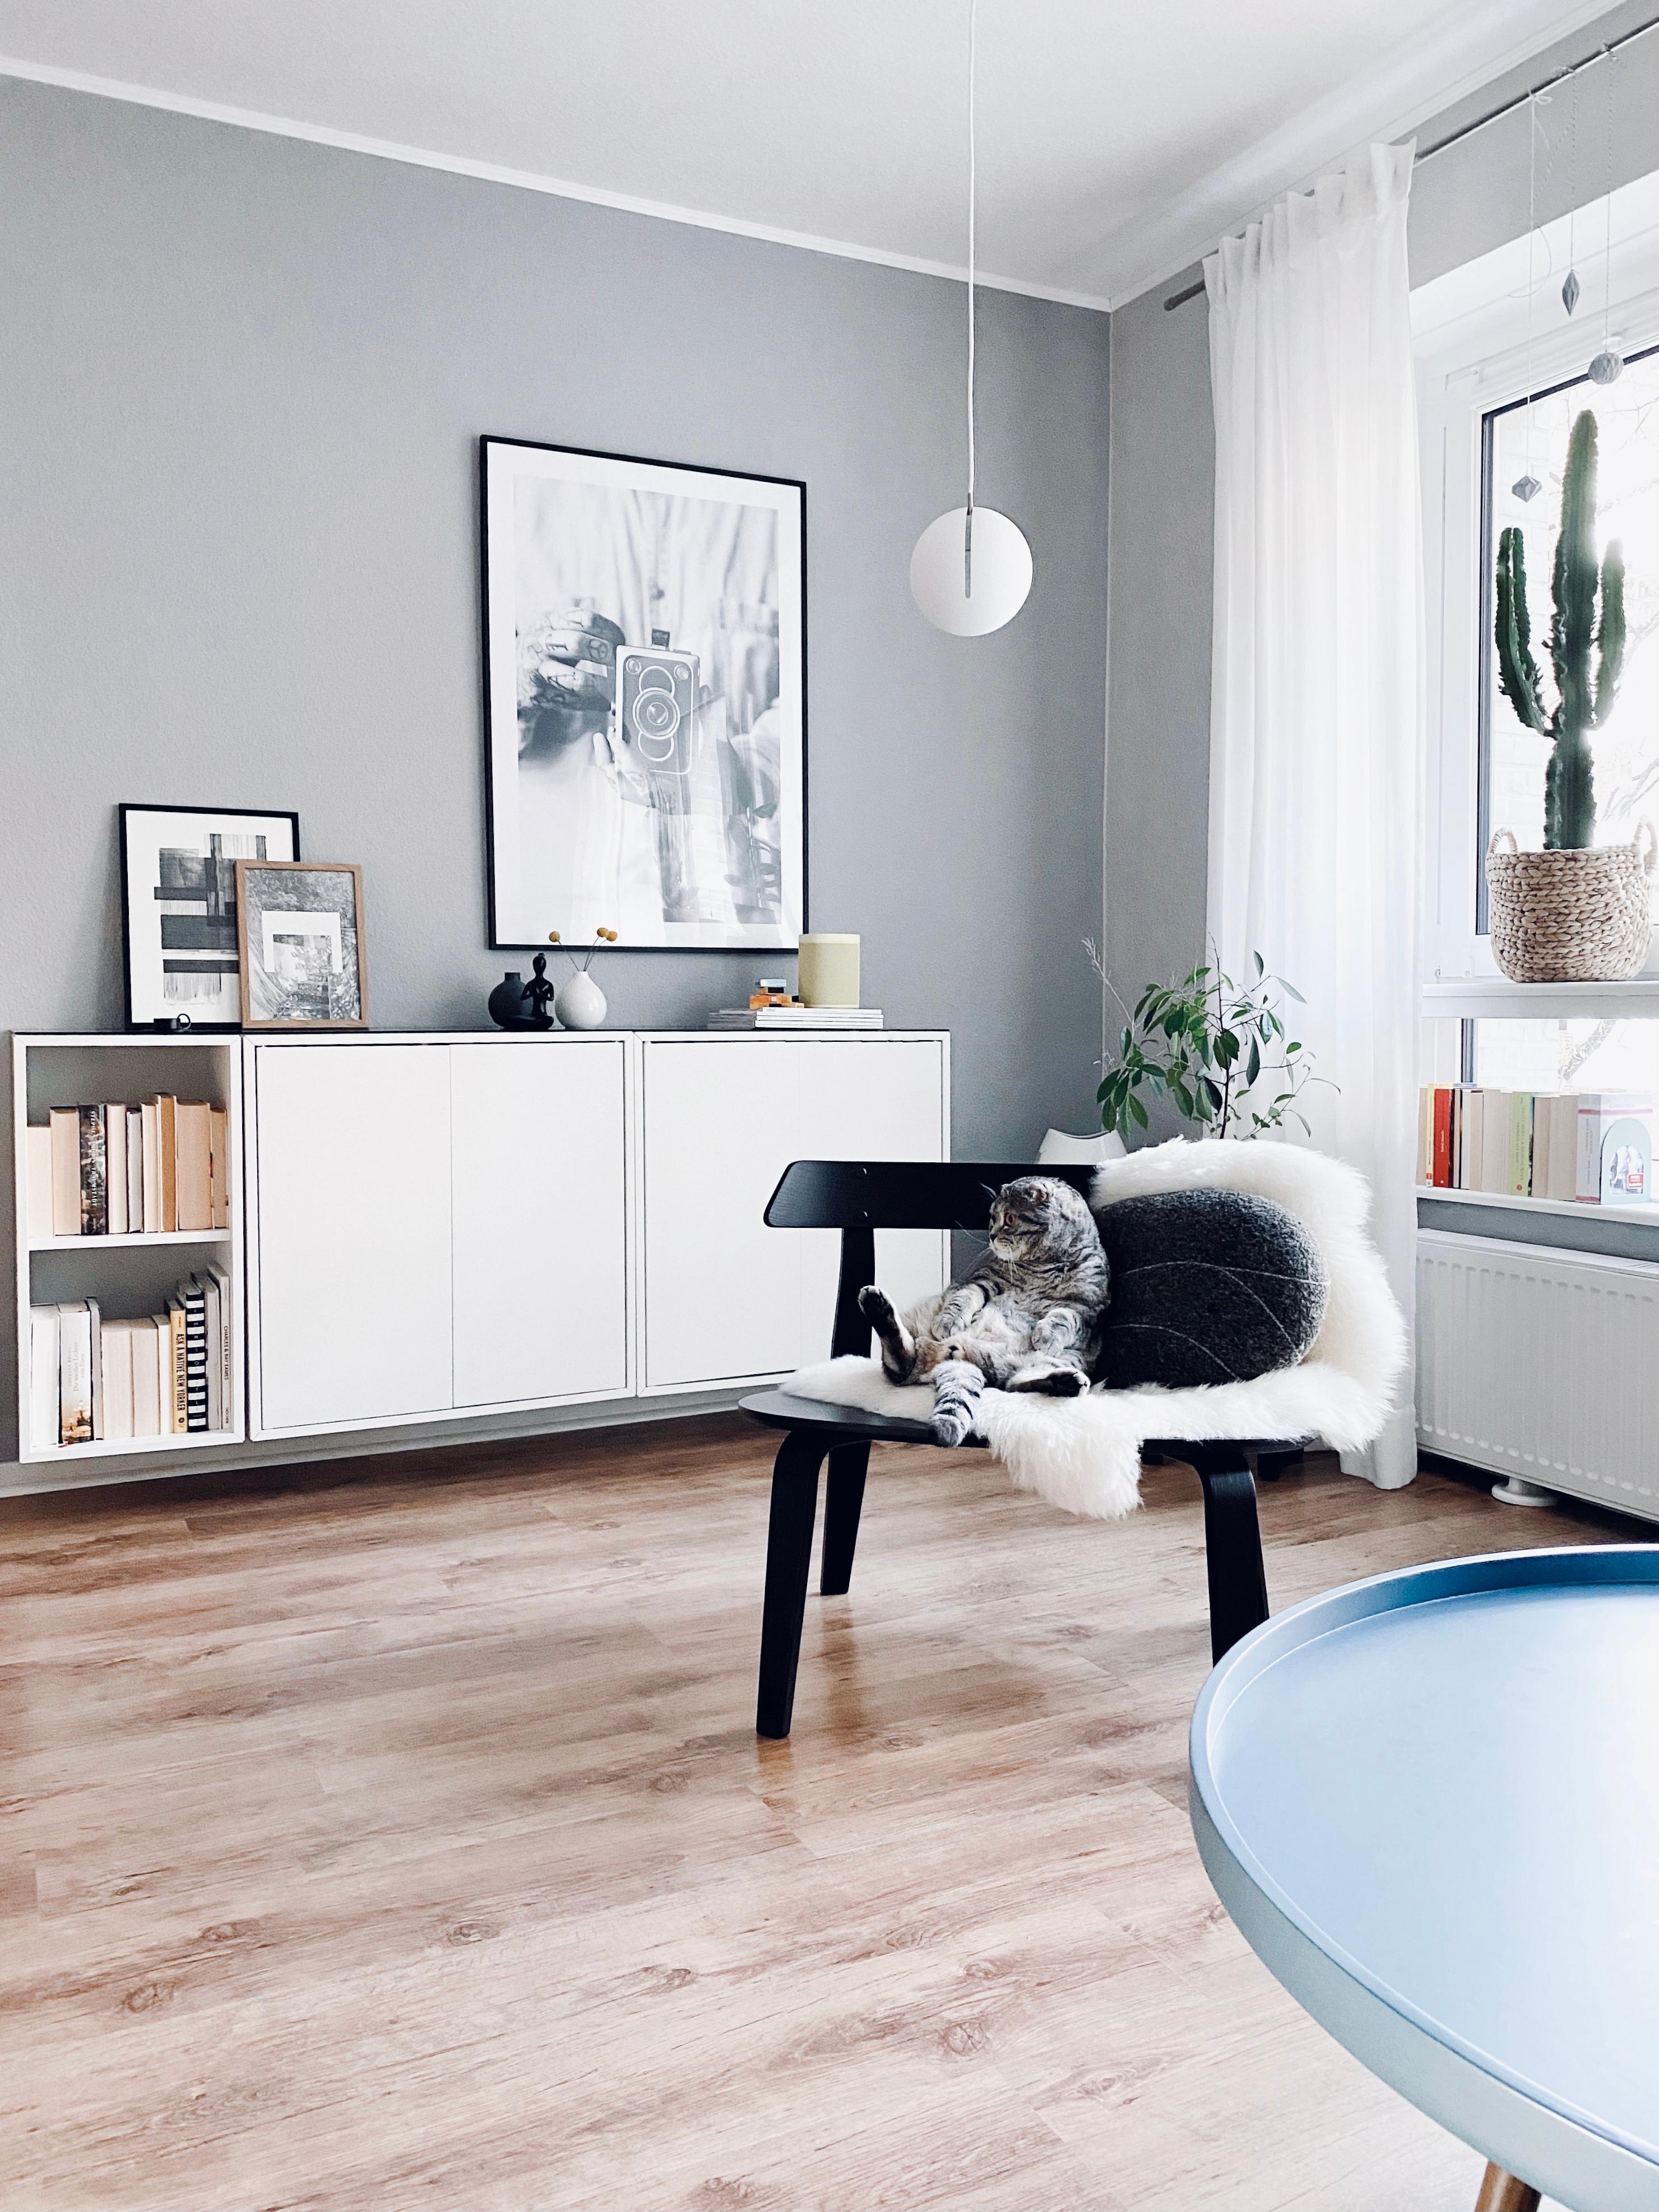 #livingroom #monochrome #murzikthegrumpyone #interior #catlover #mynordicroom